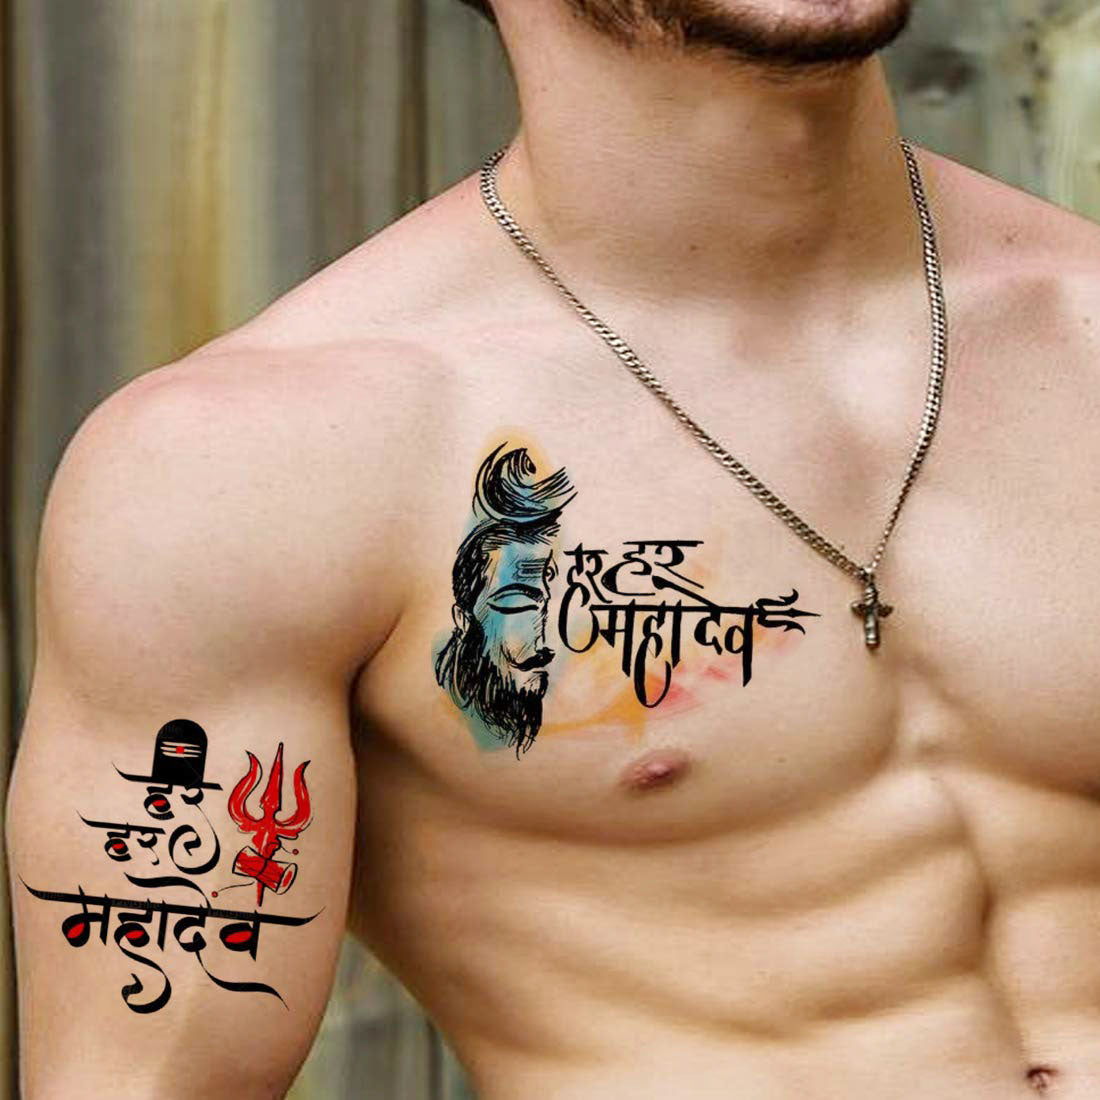 Tattoo uploaded by Vipul Chaudhary  Sai ram tattoo Sai baba tattoo om sai  ram tattoo  Tattoodo